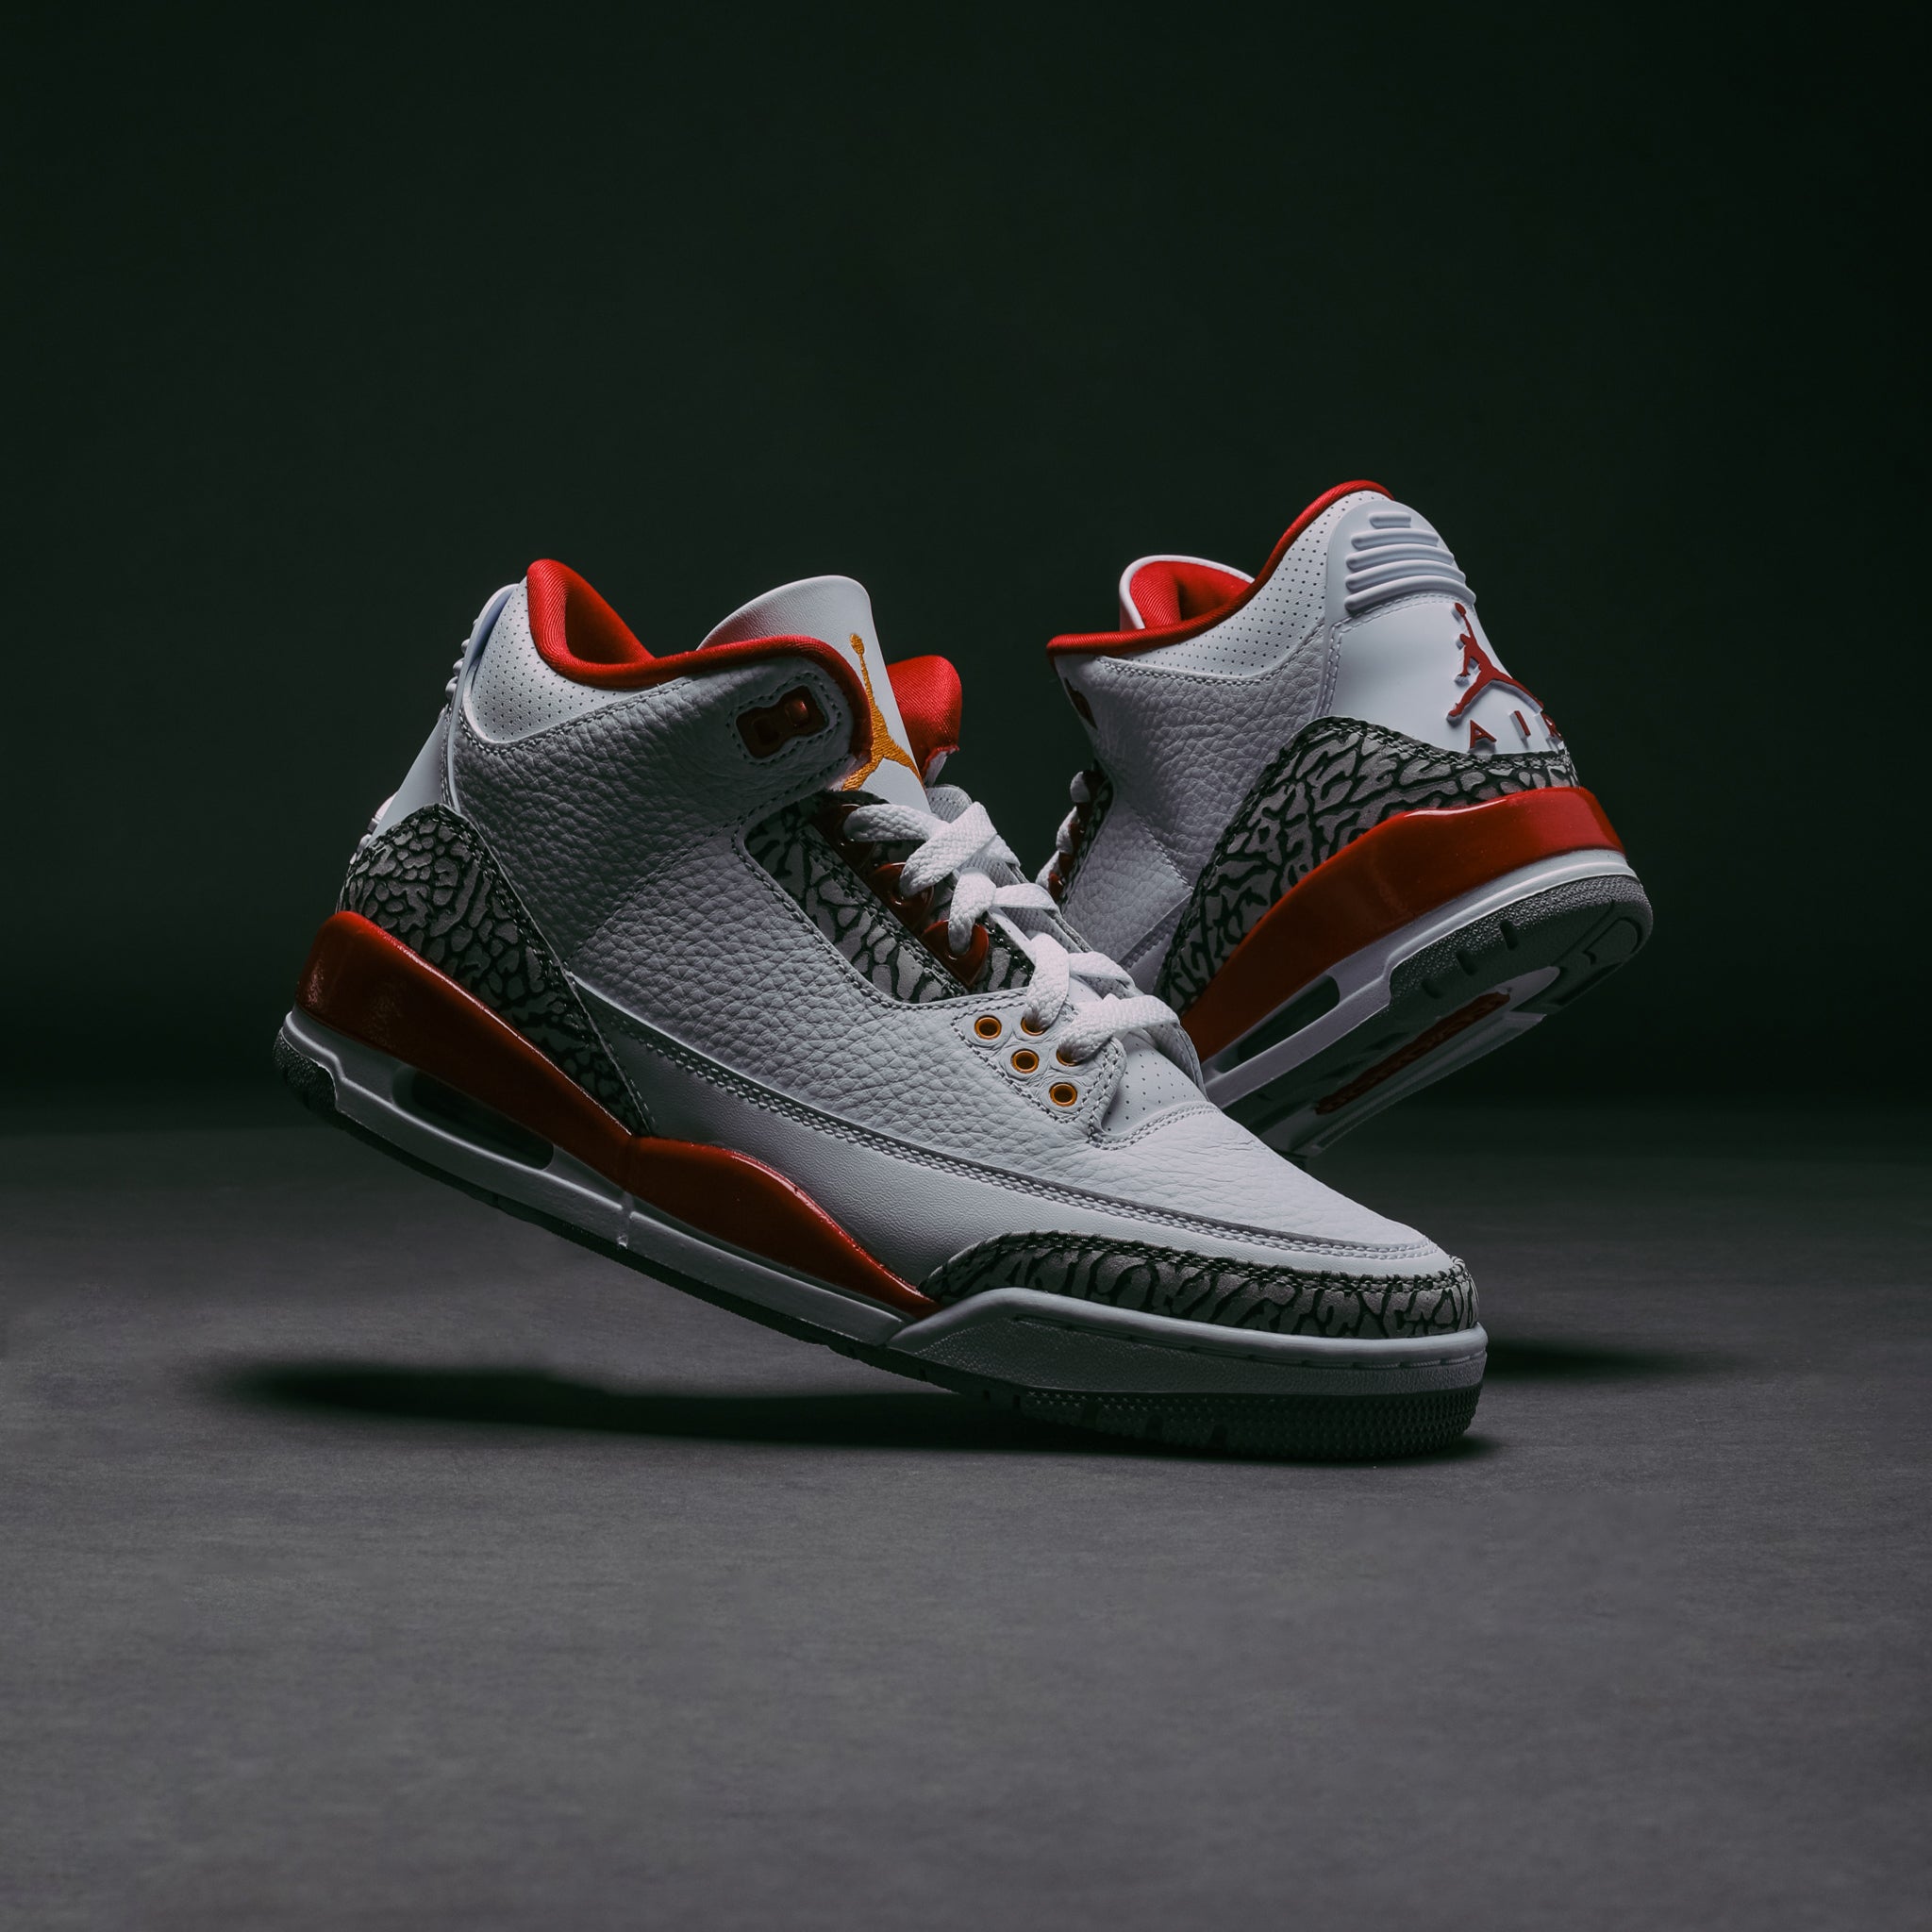 Air Jordan 3 Retro “Cardinal Red” – The Darkside Initiative